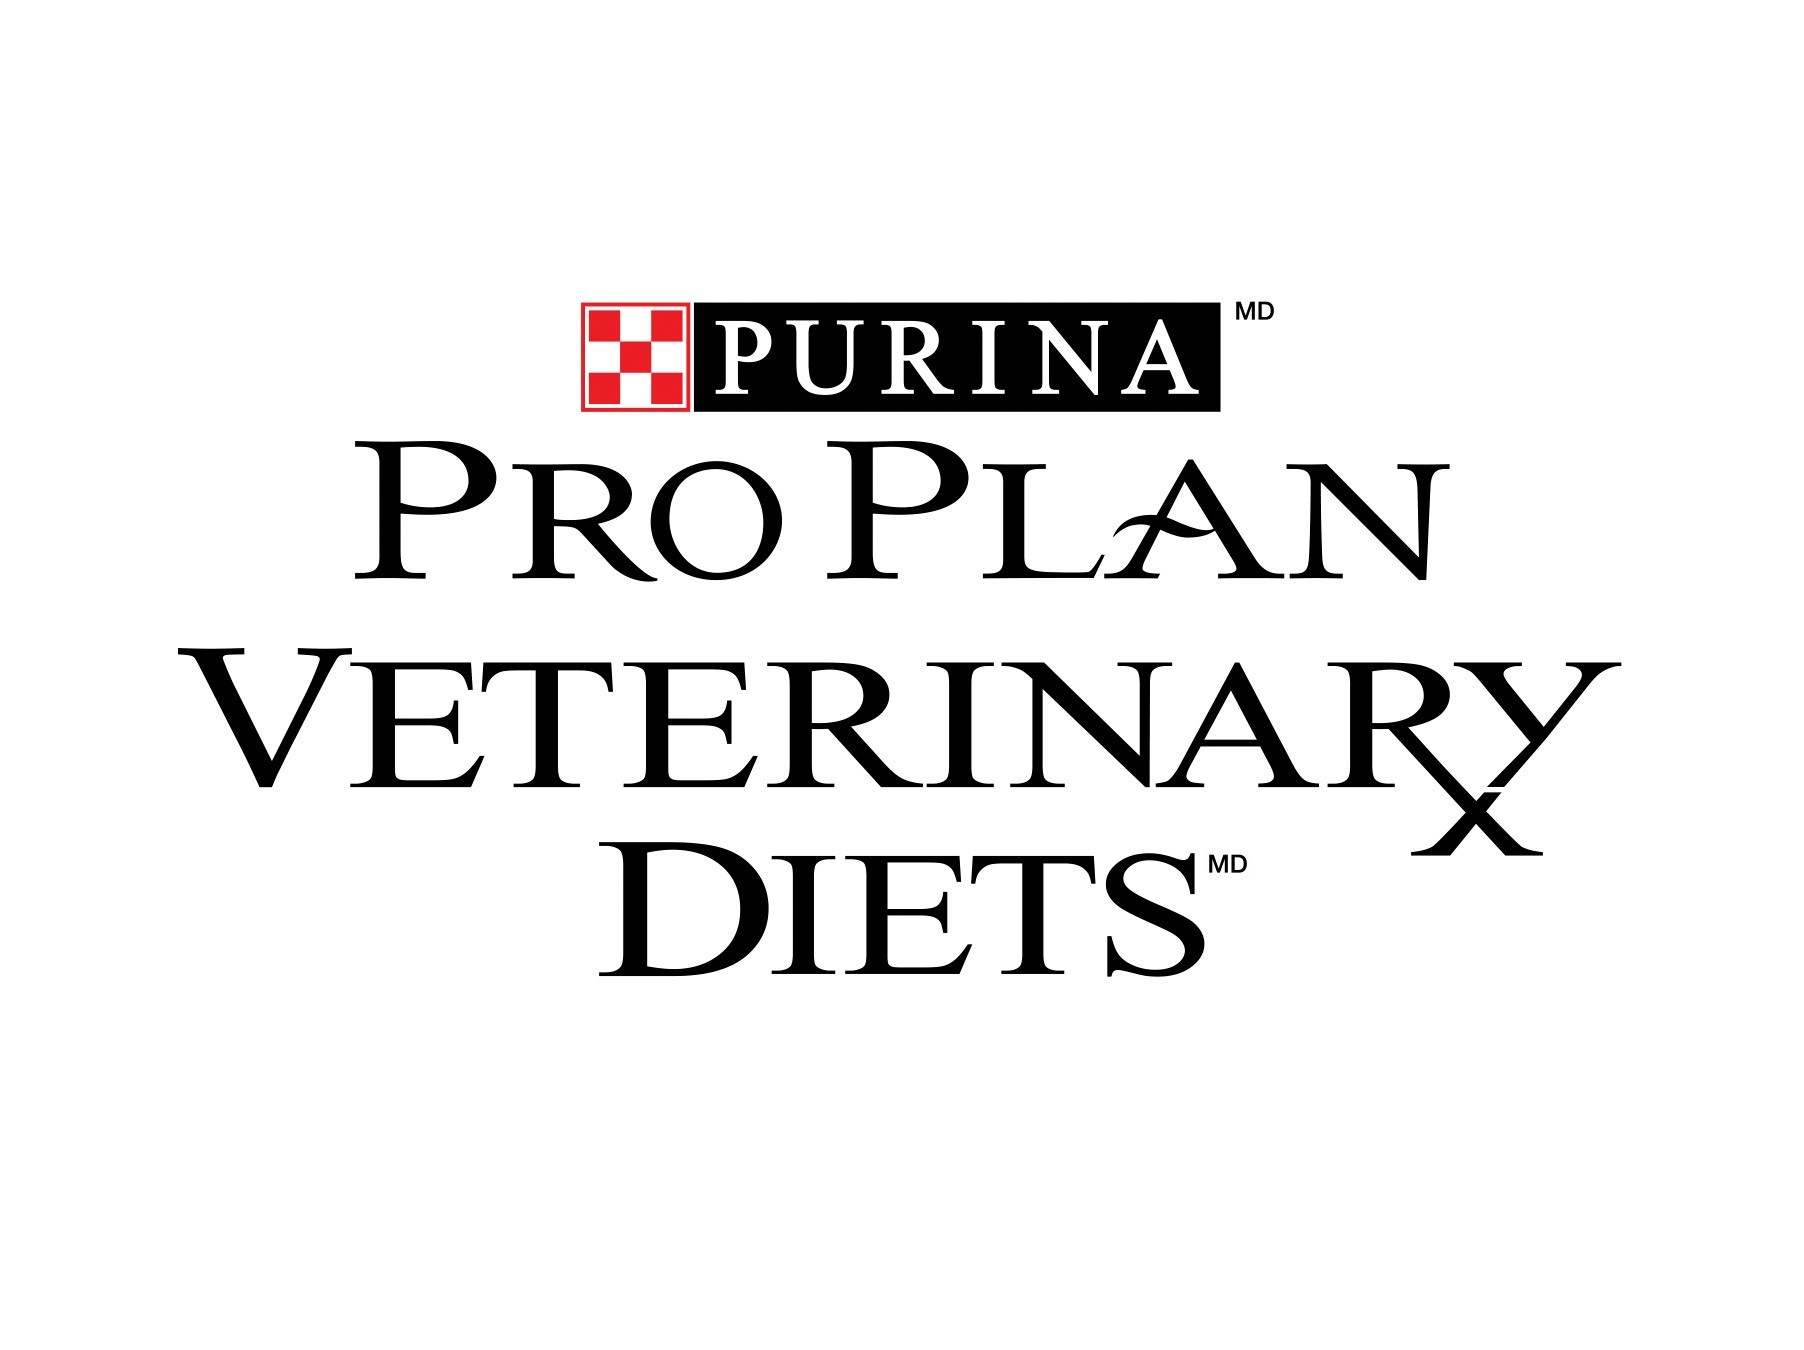 Pro Plan Veterinary Diets